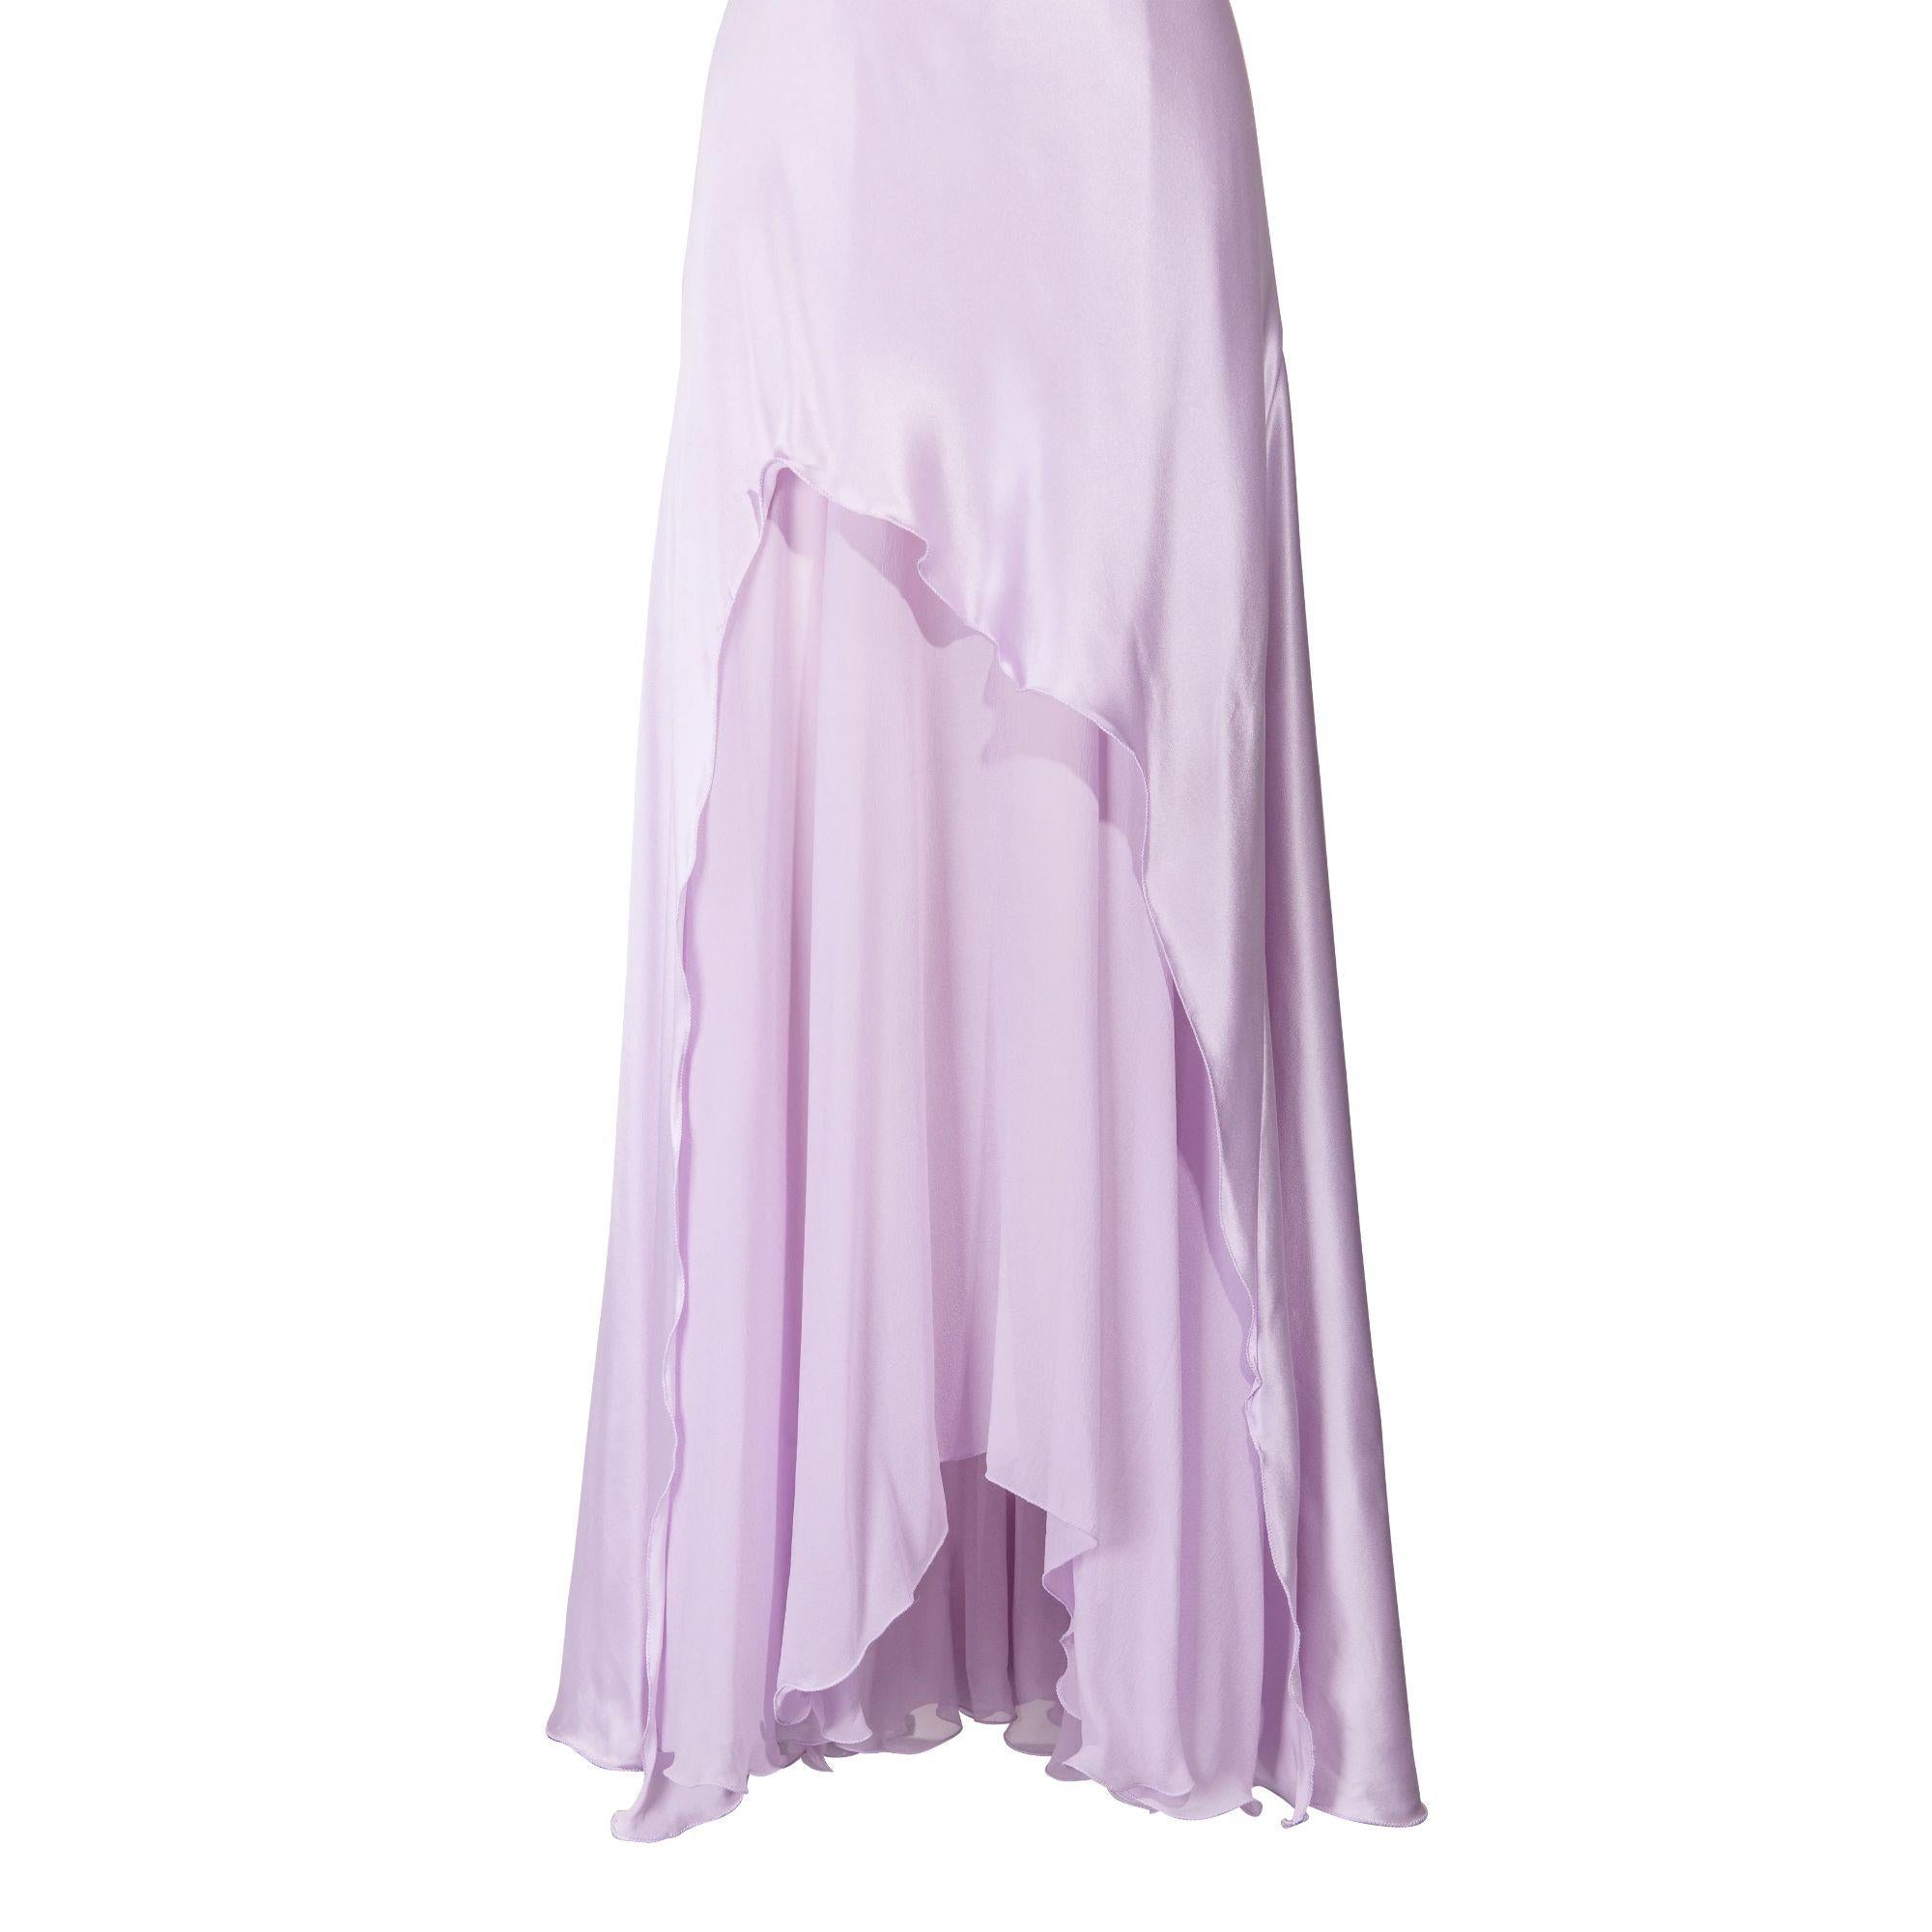 S/S 1995 Gianni Versace Purple Silk Asymmetrical Drape Gown 1